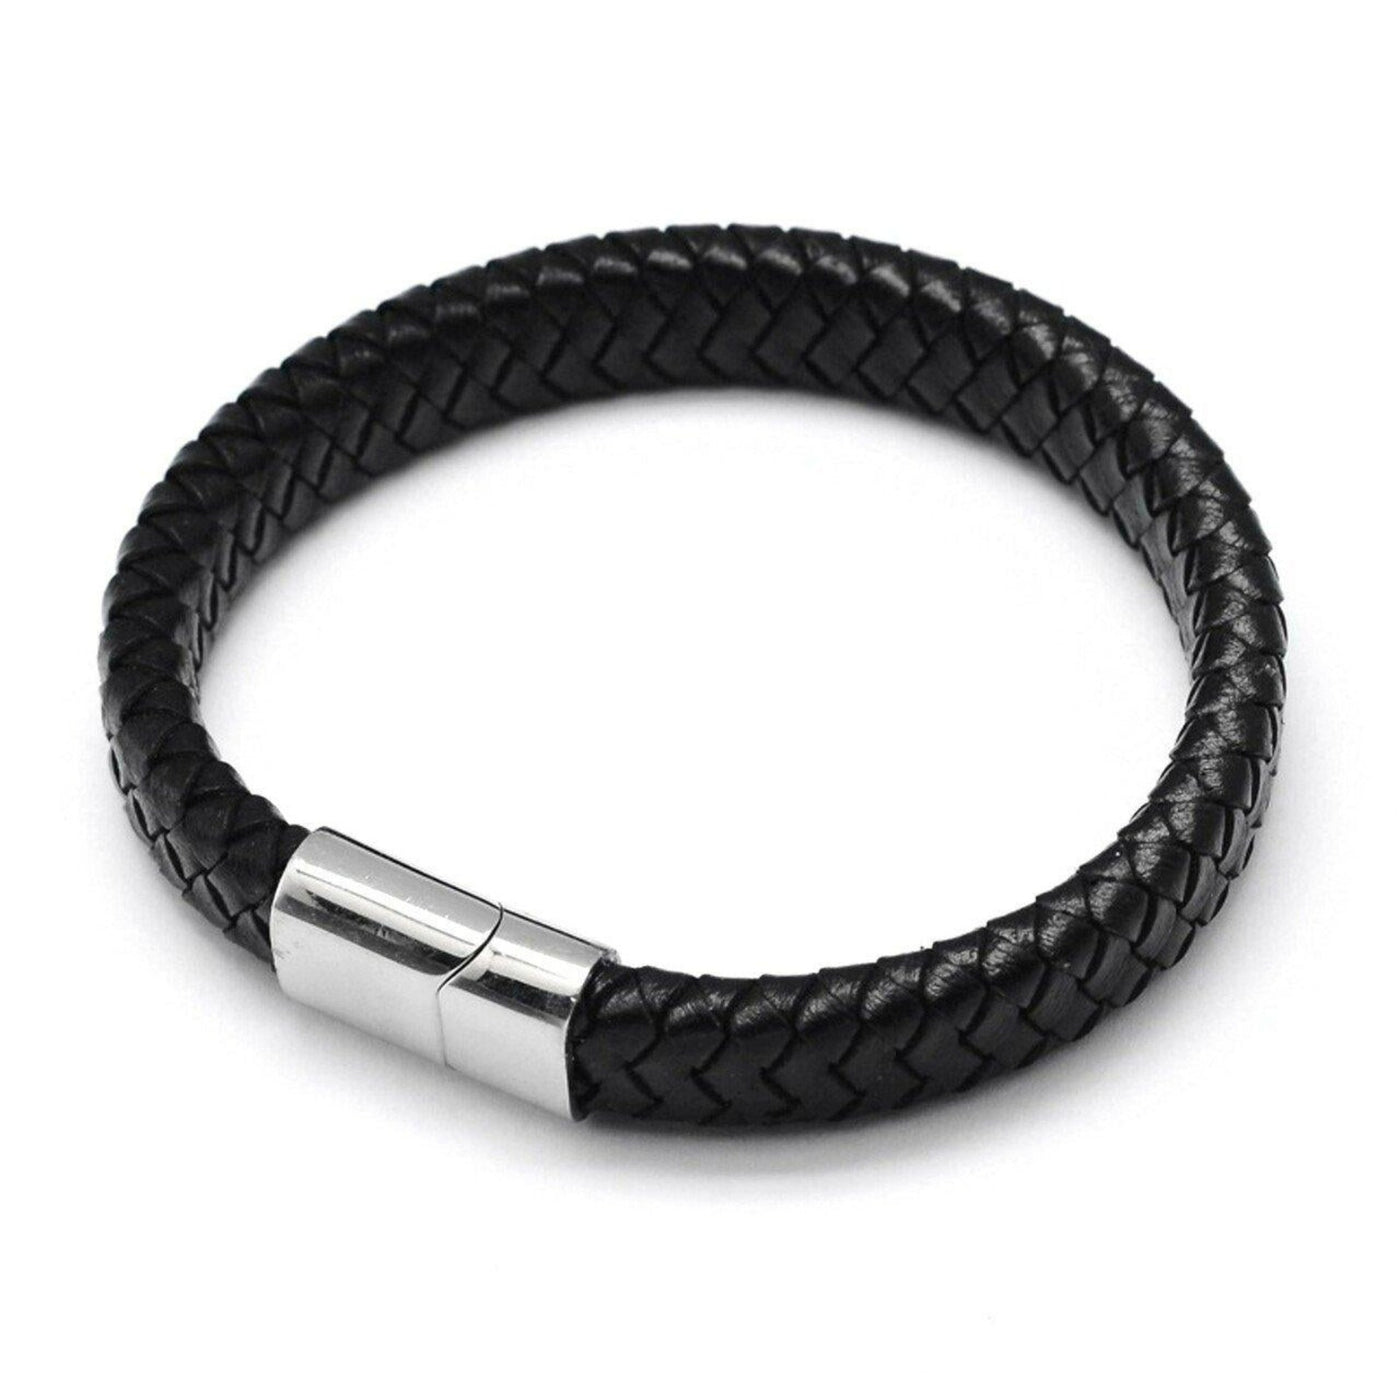 Luxury Men's Black Plated Leather Bracelet With Stainless Fastenings Steel Fastening